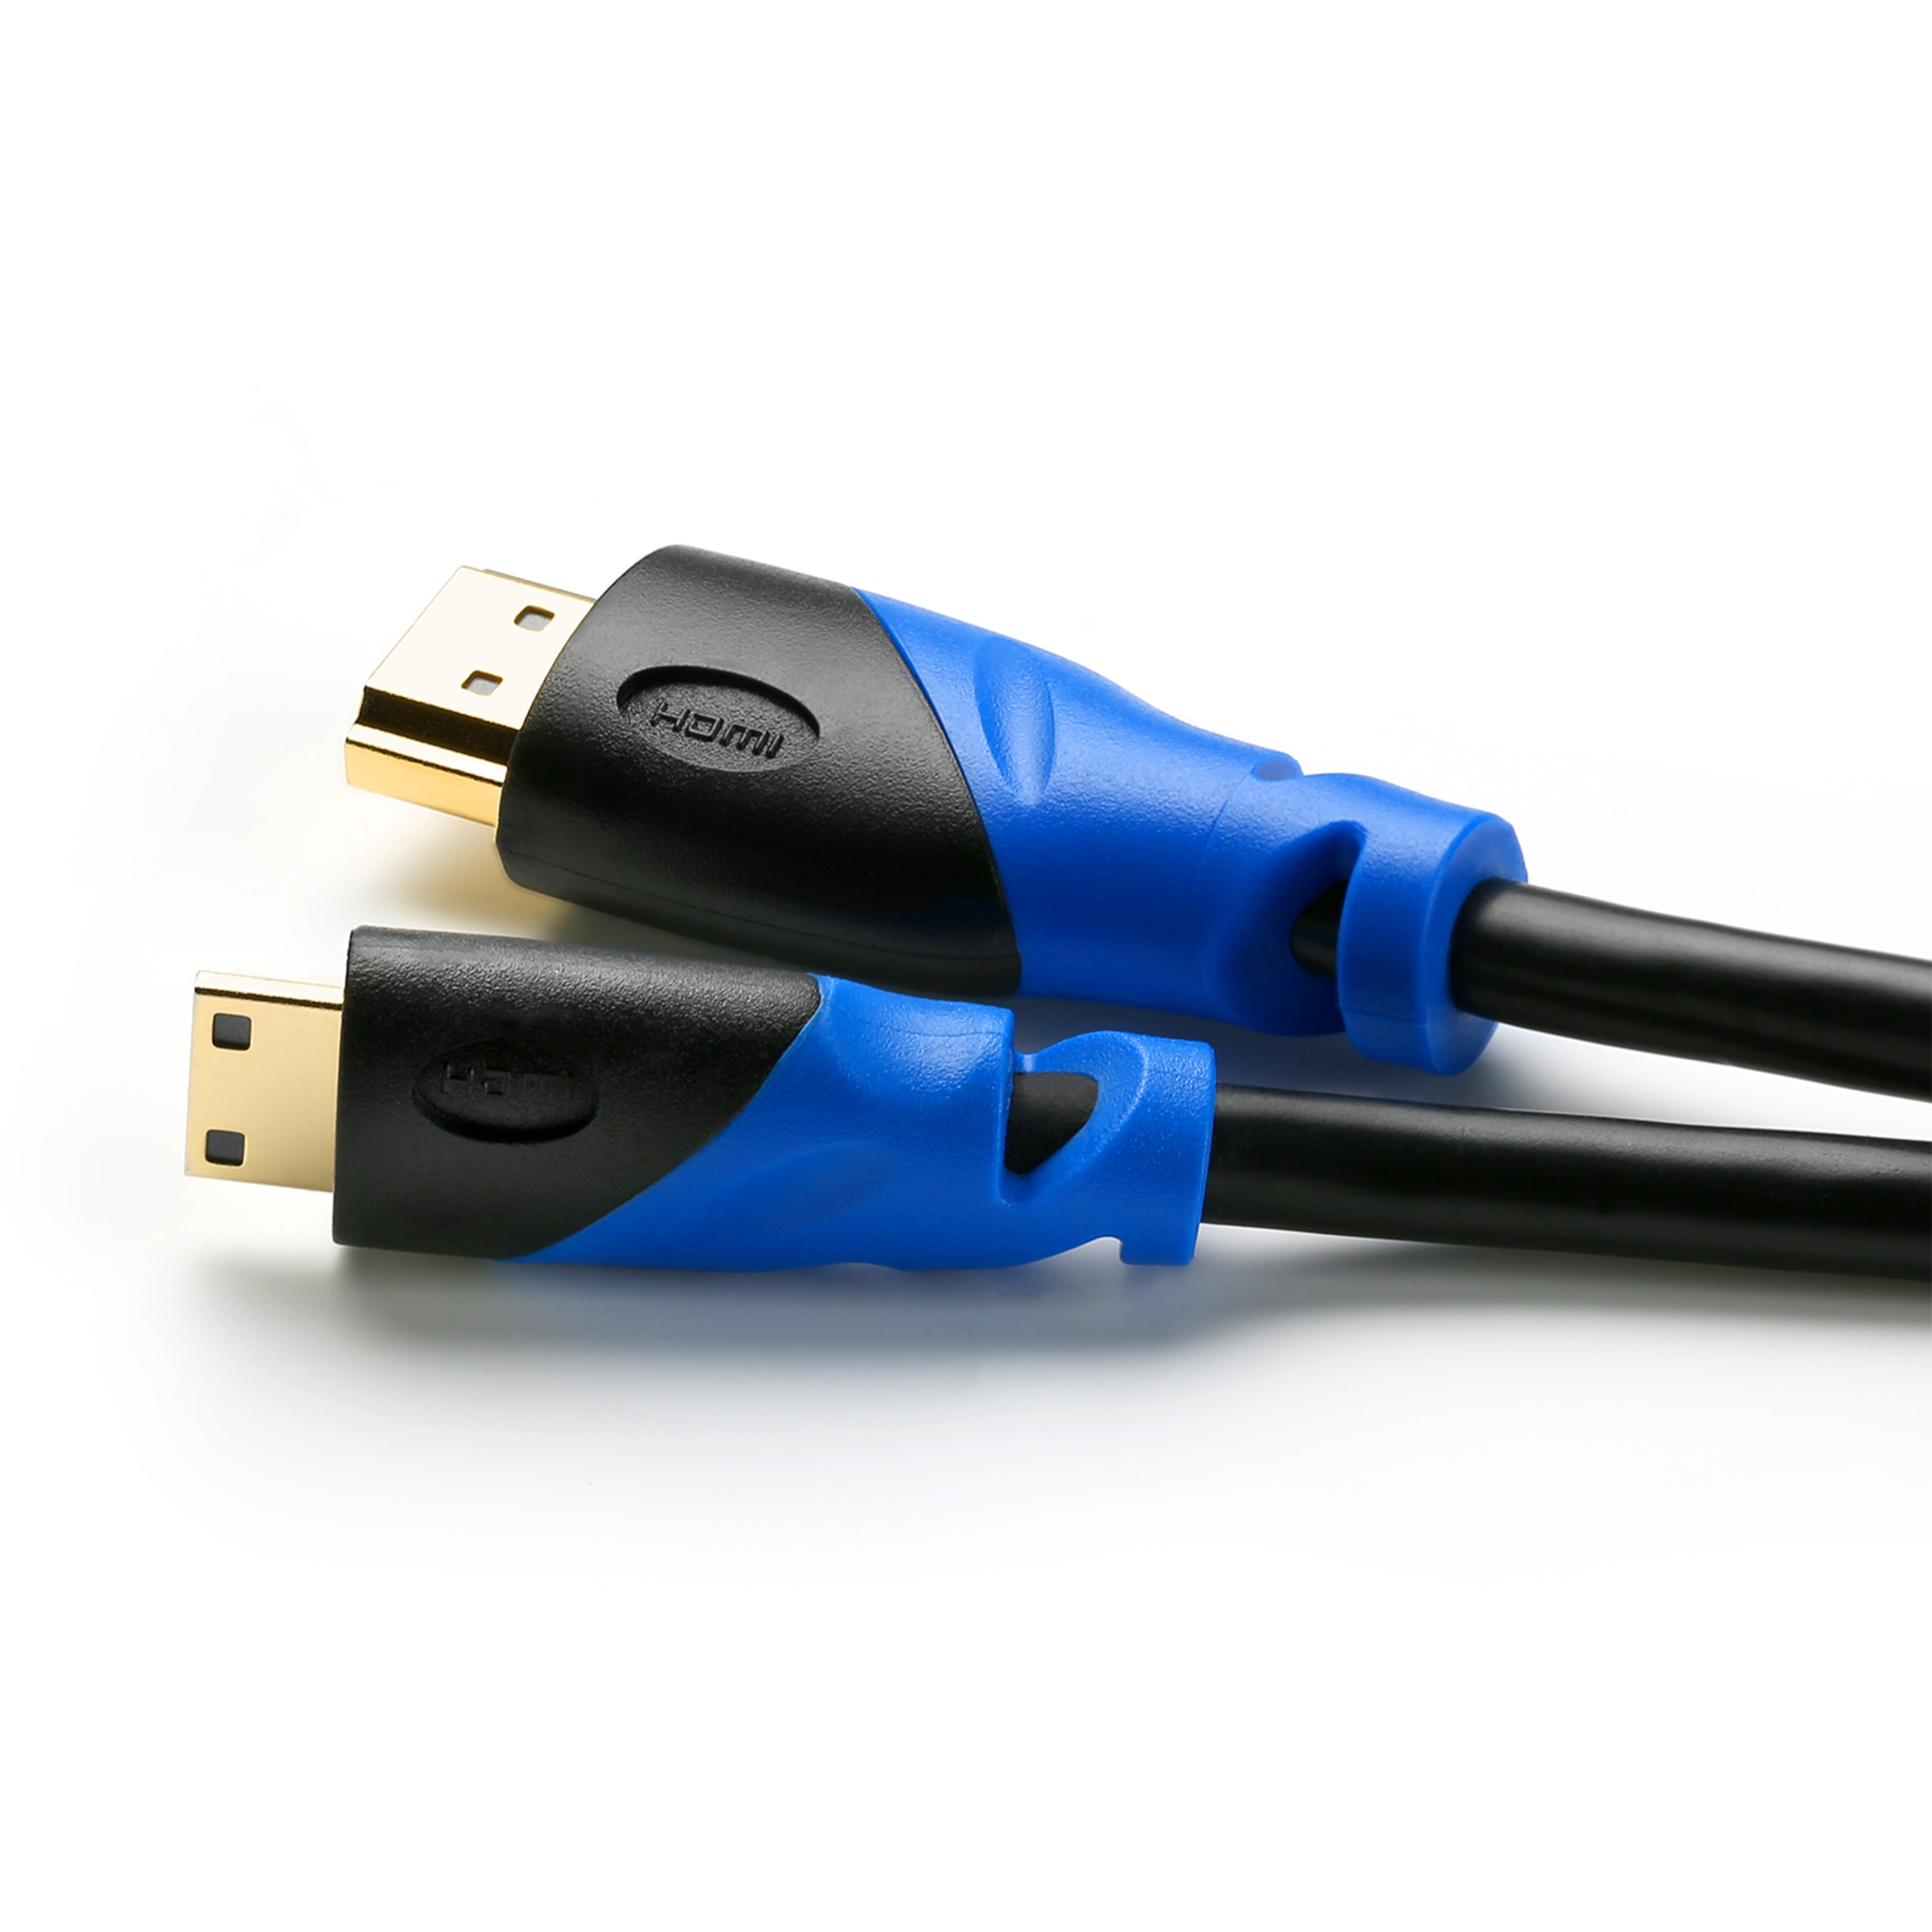 2.0 Kabel, MiniHDMI CSL Kabel, schwarz/blau HDMI 5m